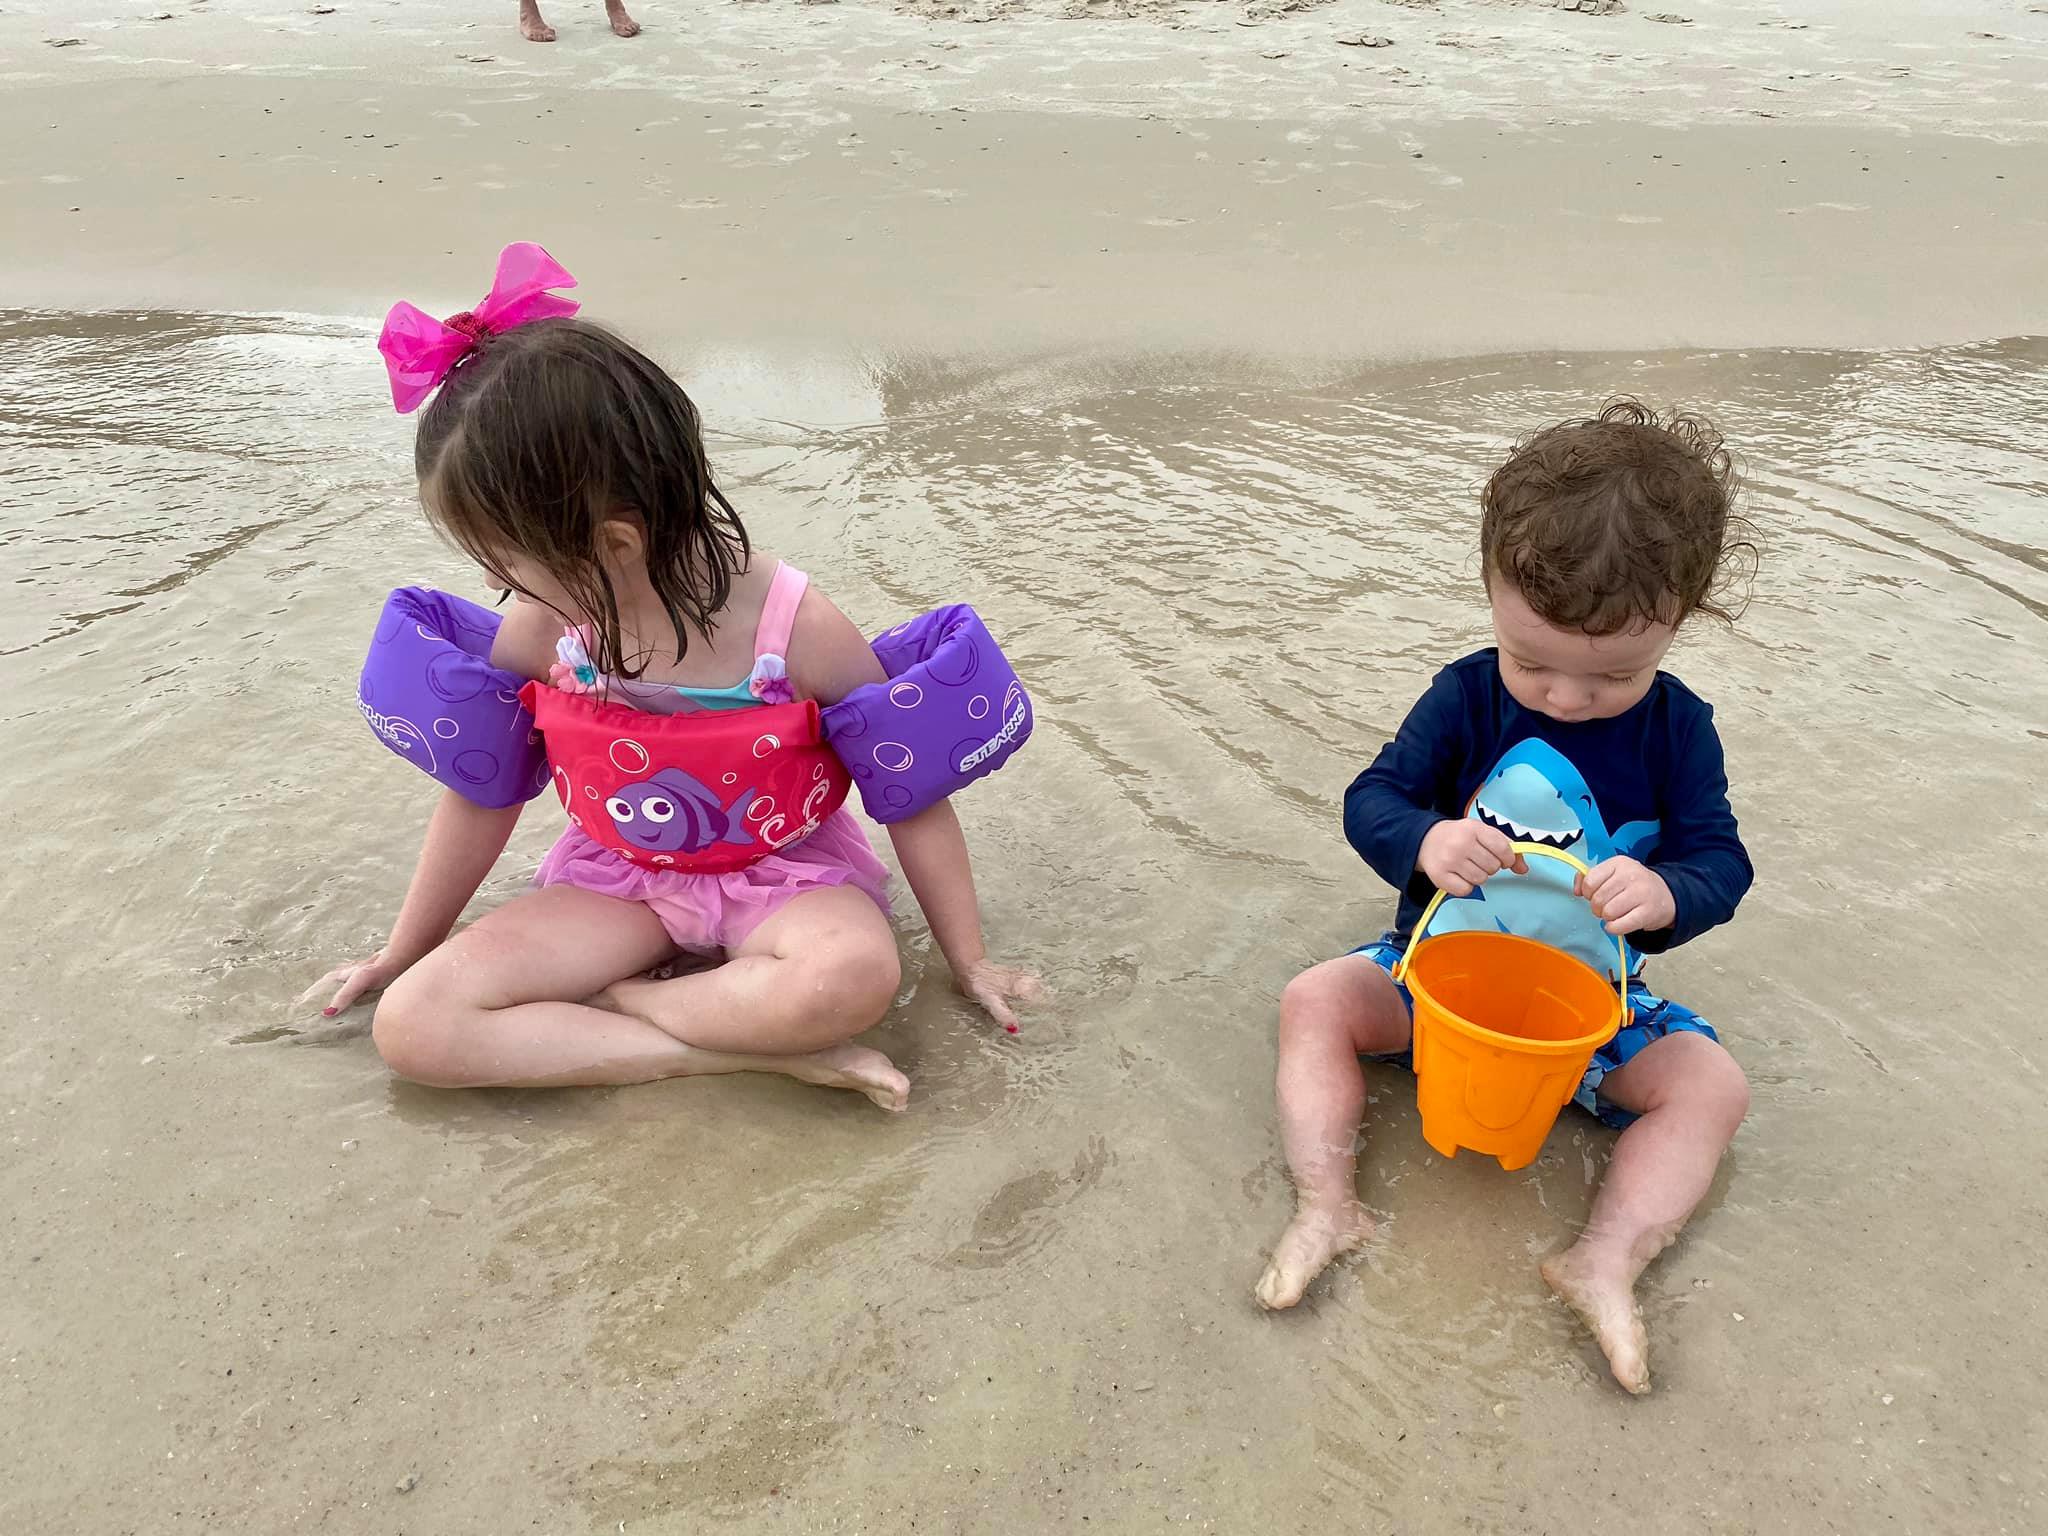 Kids on a beach